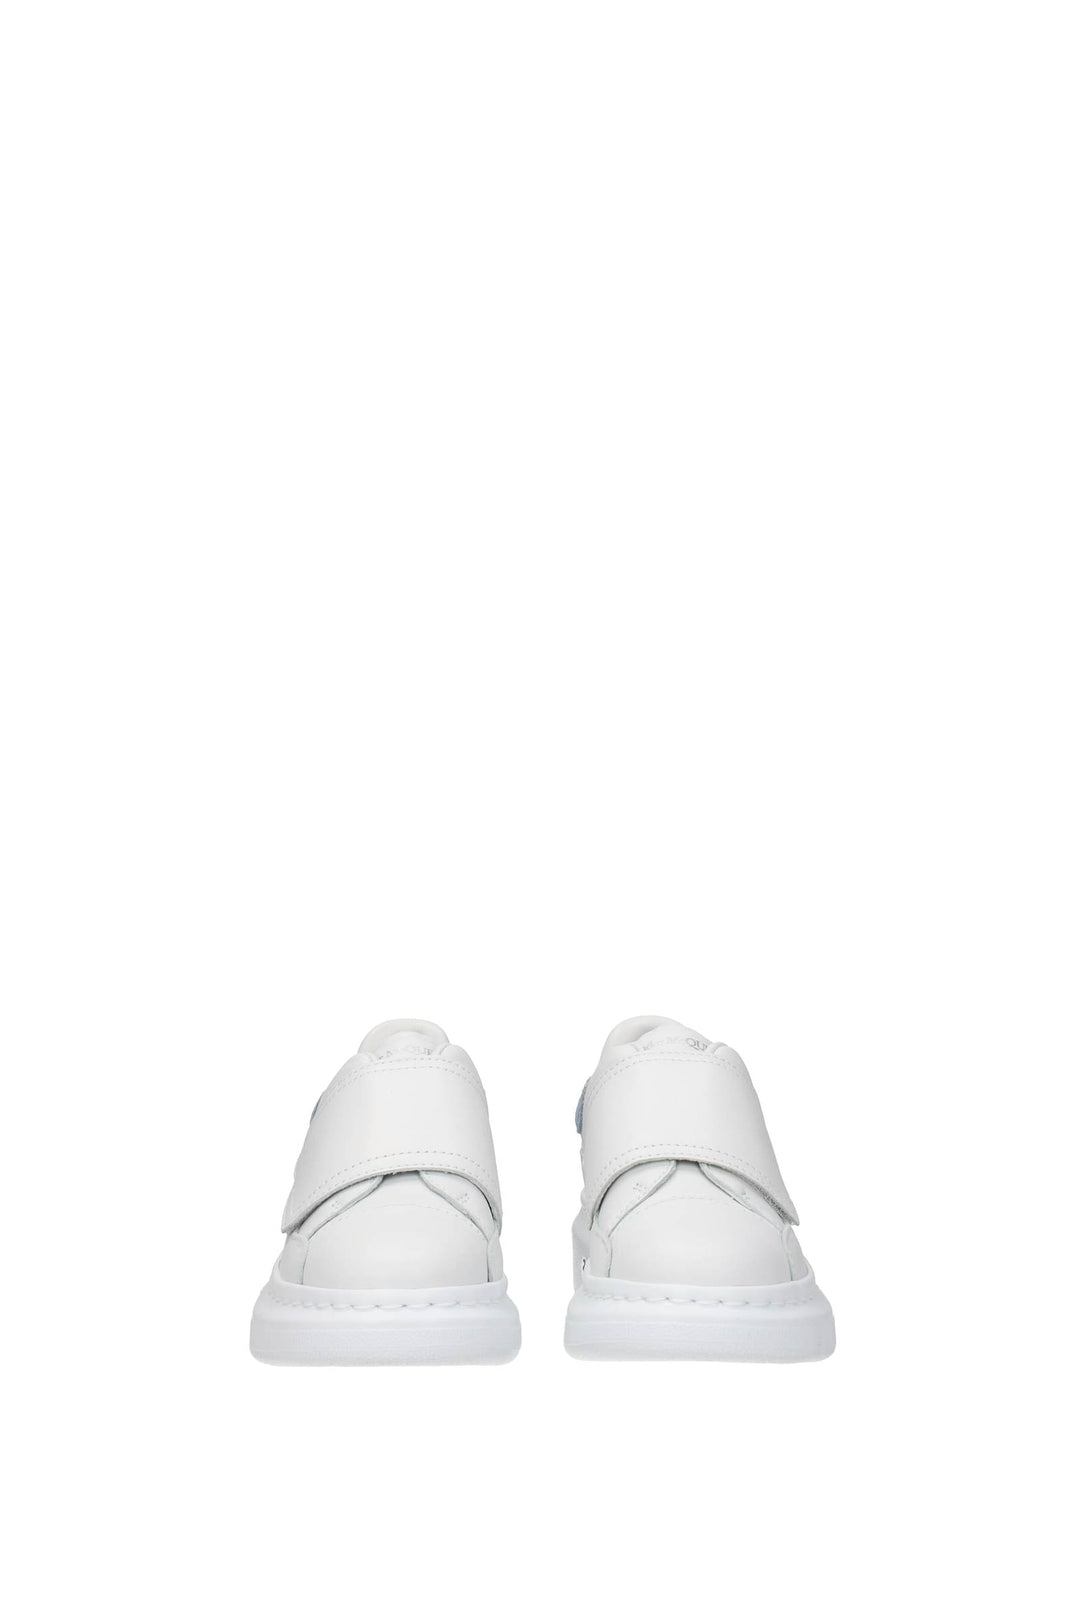 Idee Regalo Sneakers Kids Pelle Bianco Celeste - Alexander McQueen - Uomo